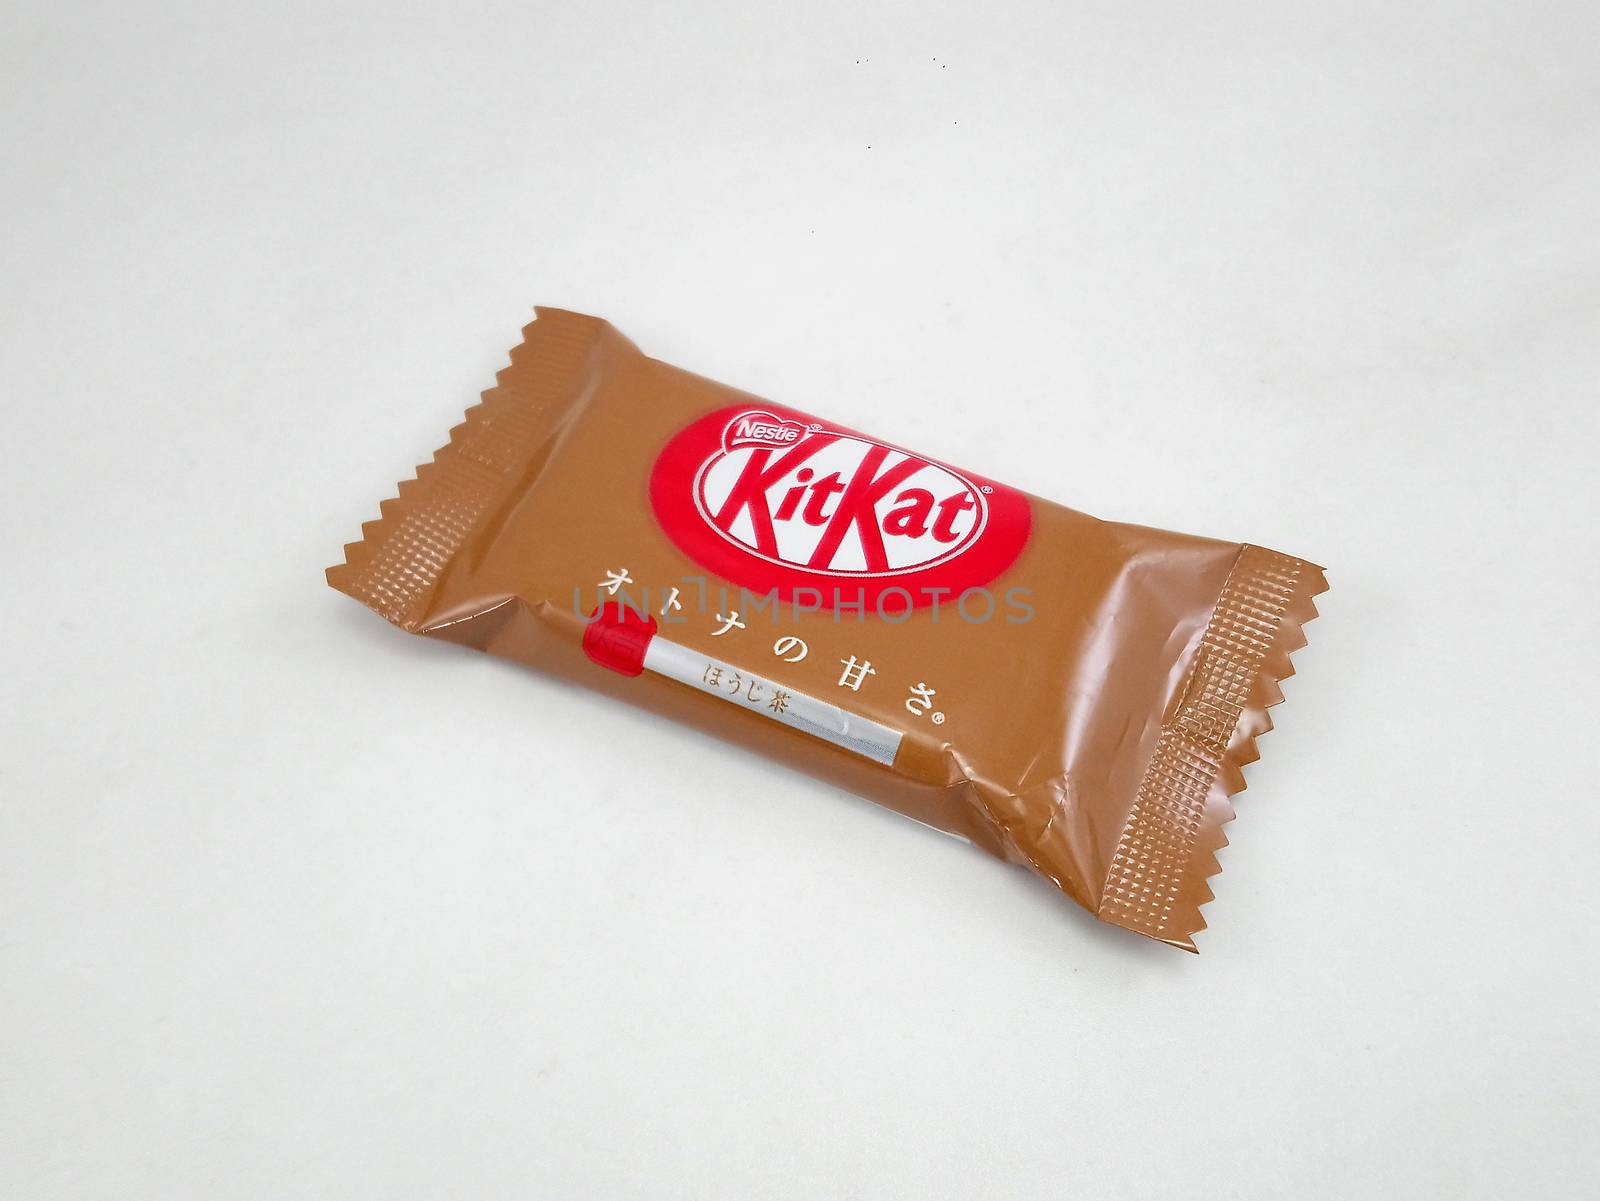  Kitkat chocolate in Manila, Philippines by imwaltersy